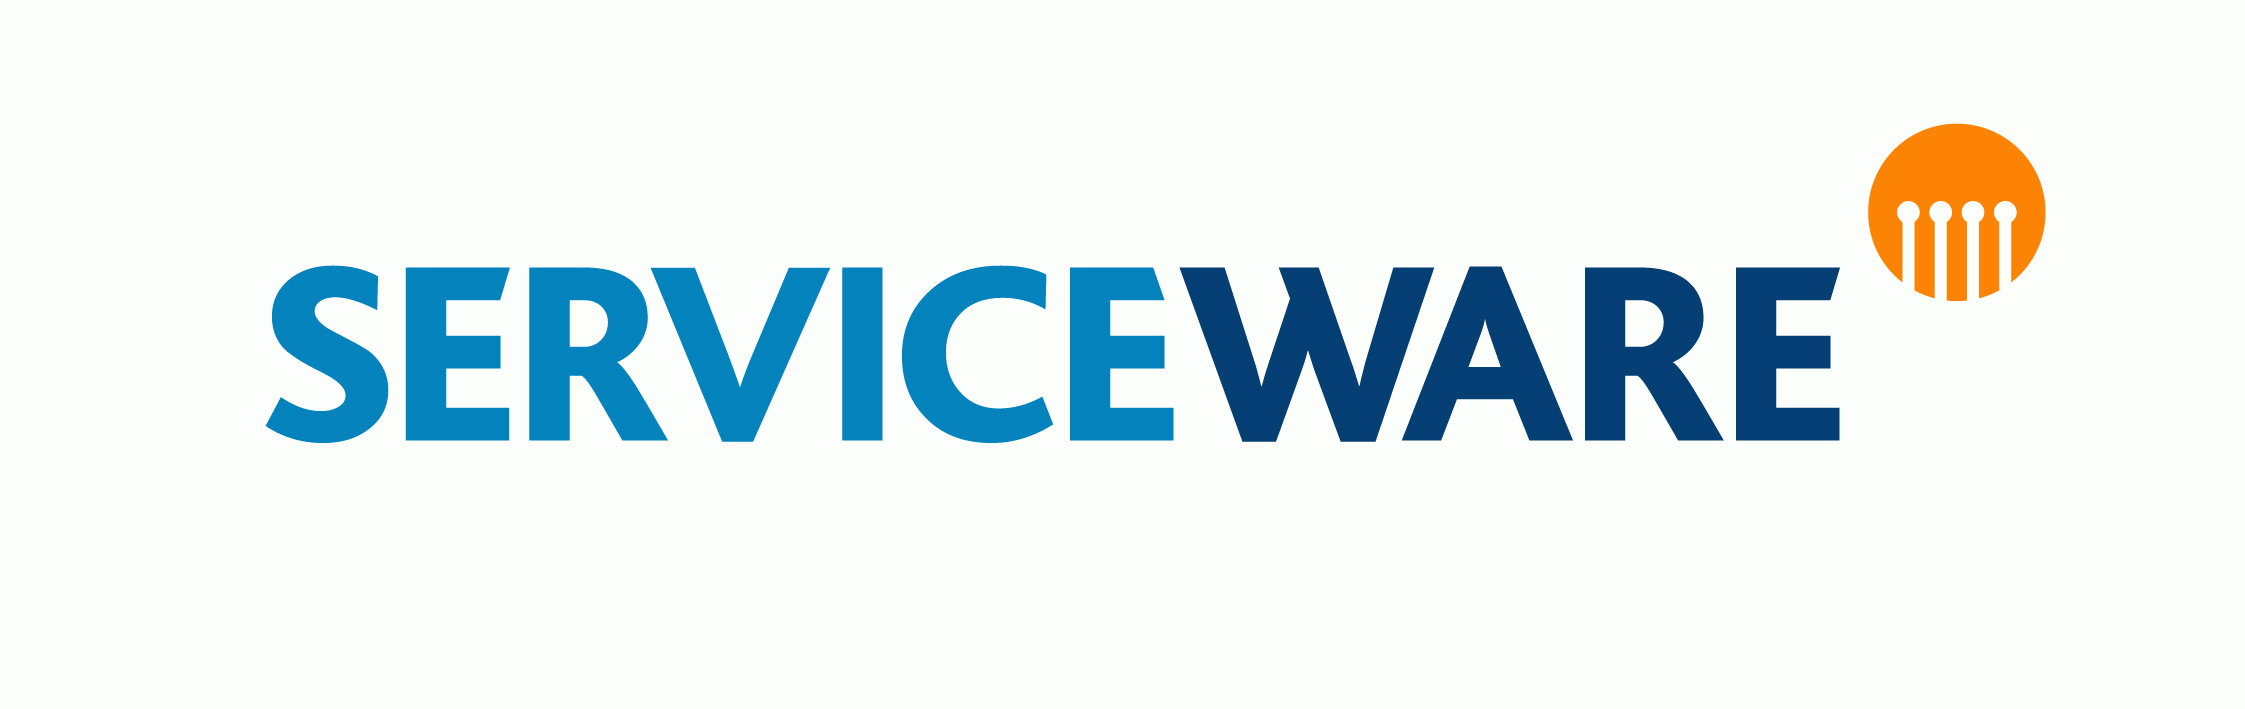 Serviceware Benelux BV